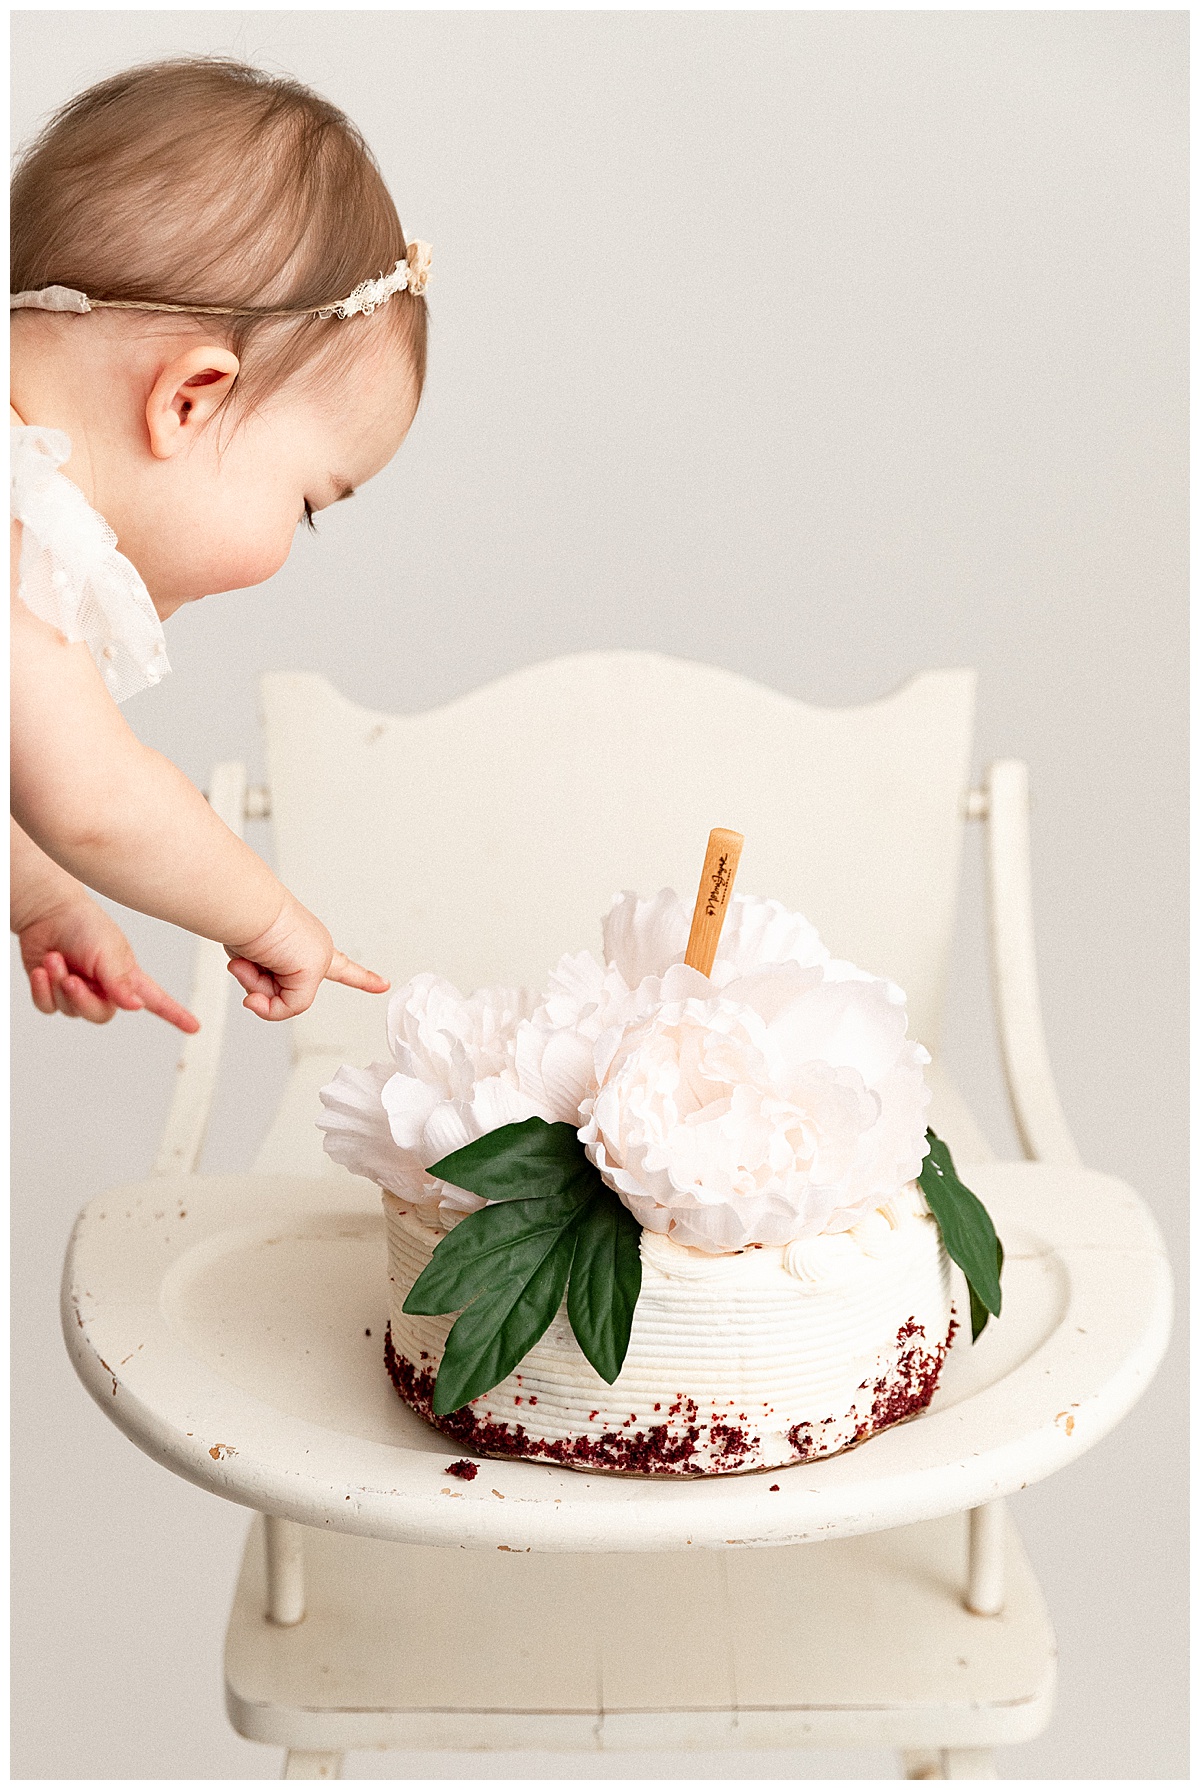 Baby reaching for cake forFirst Birthday Cake Smash